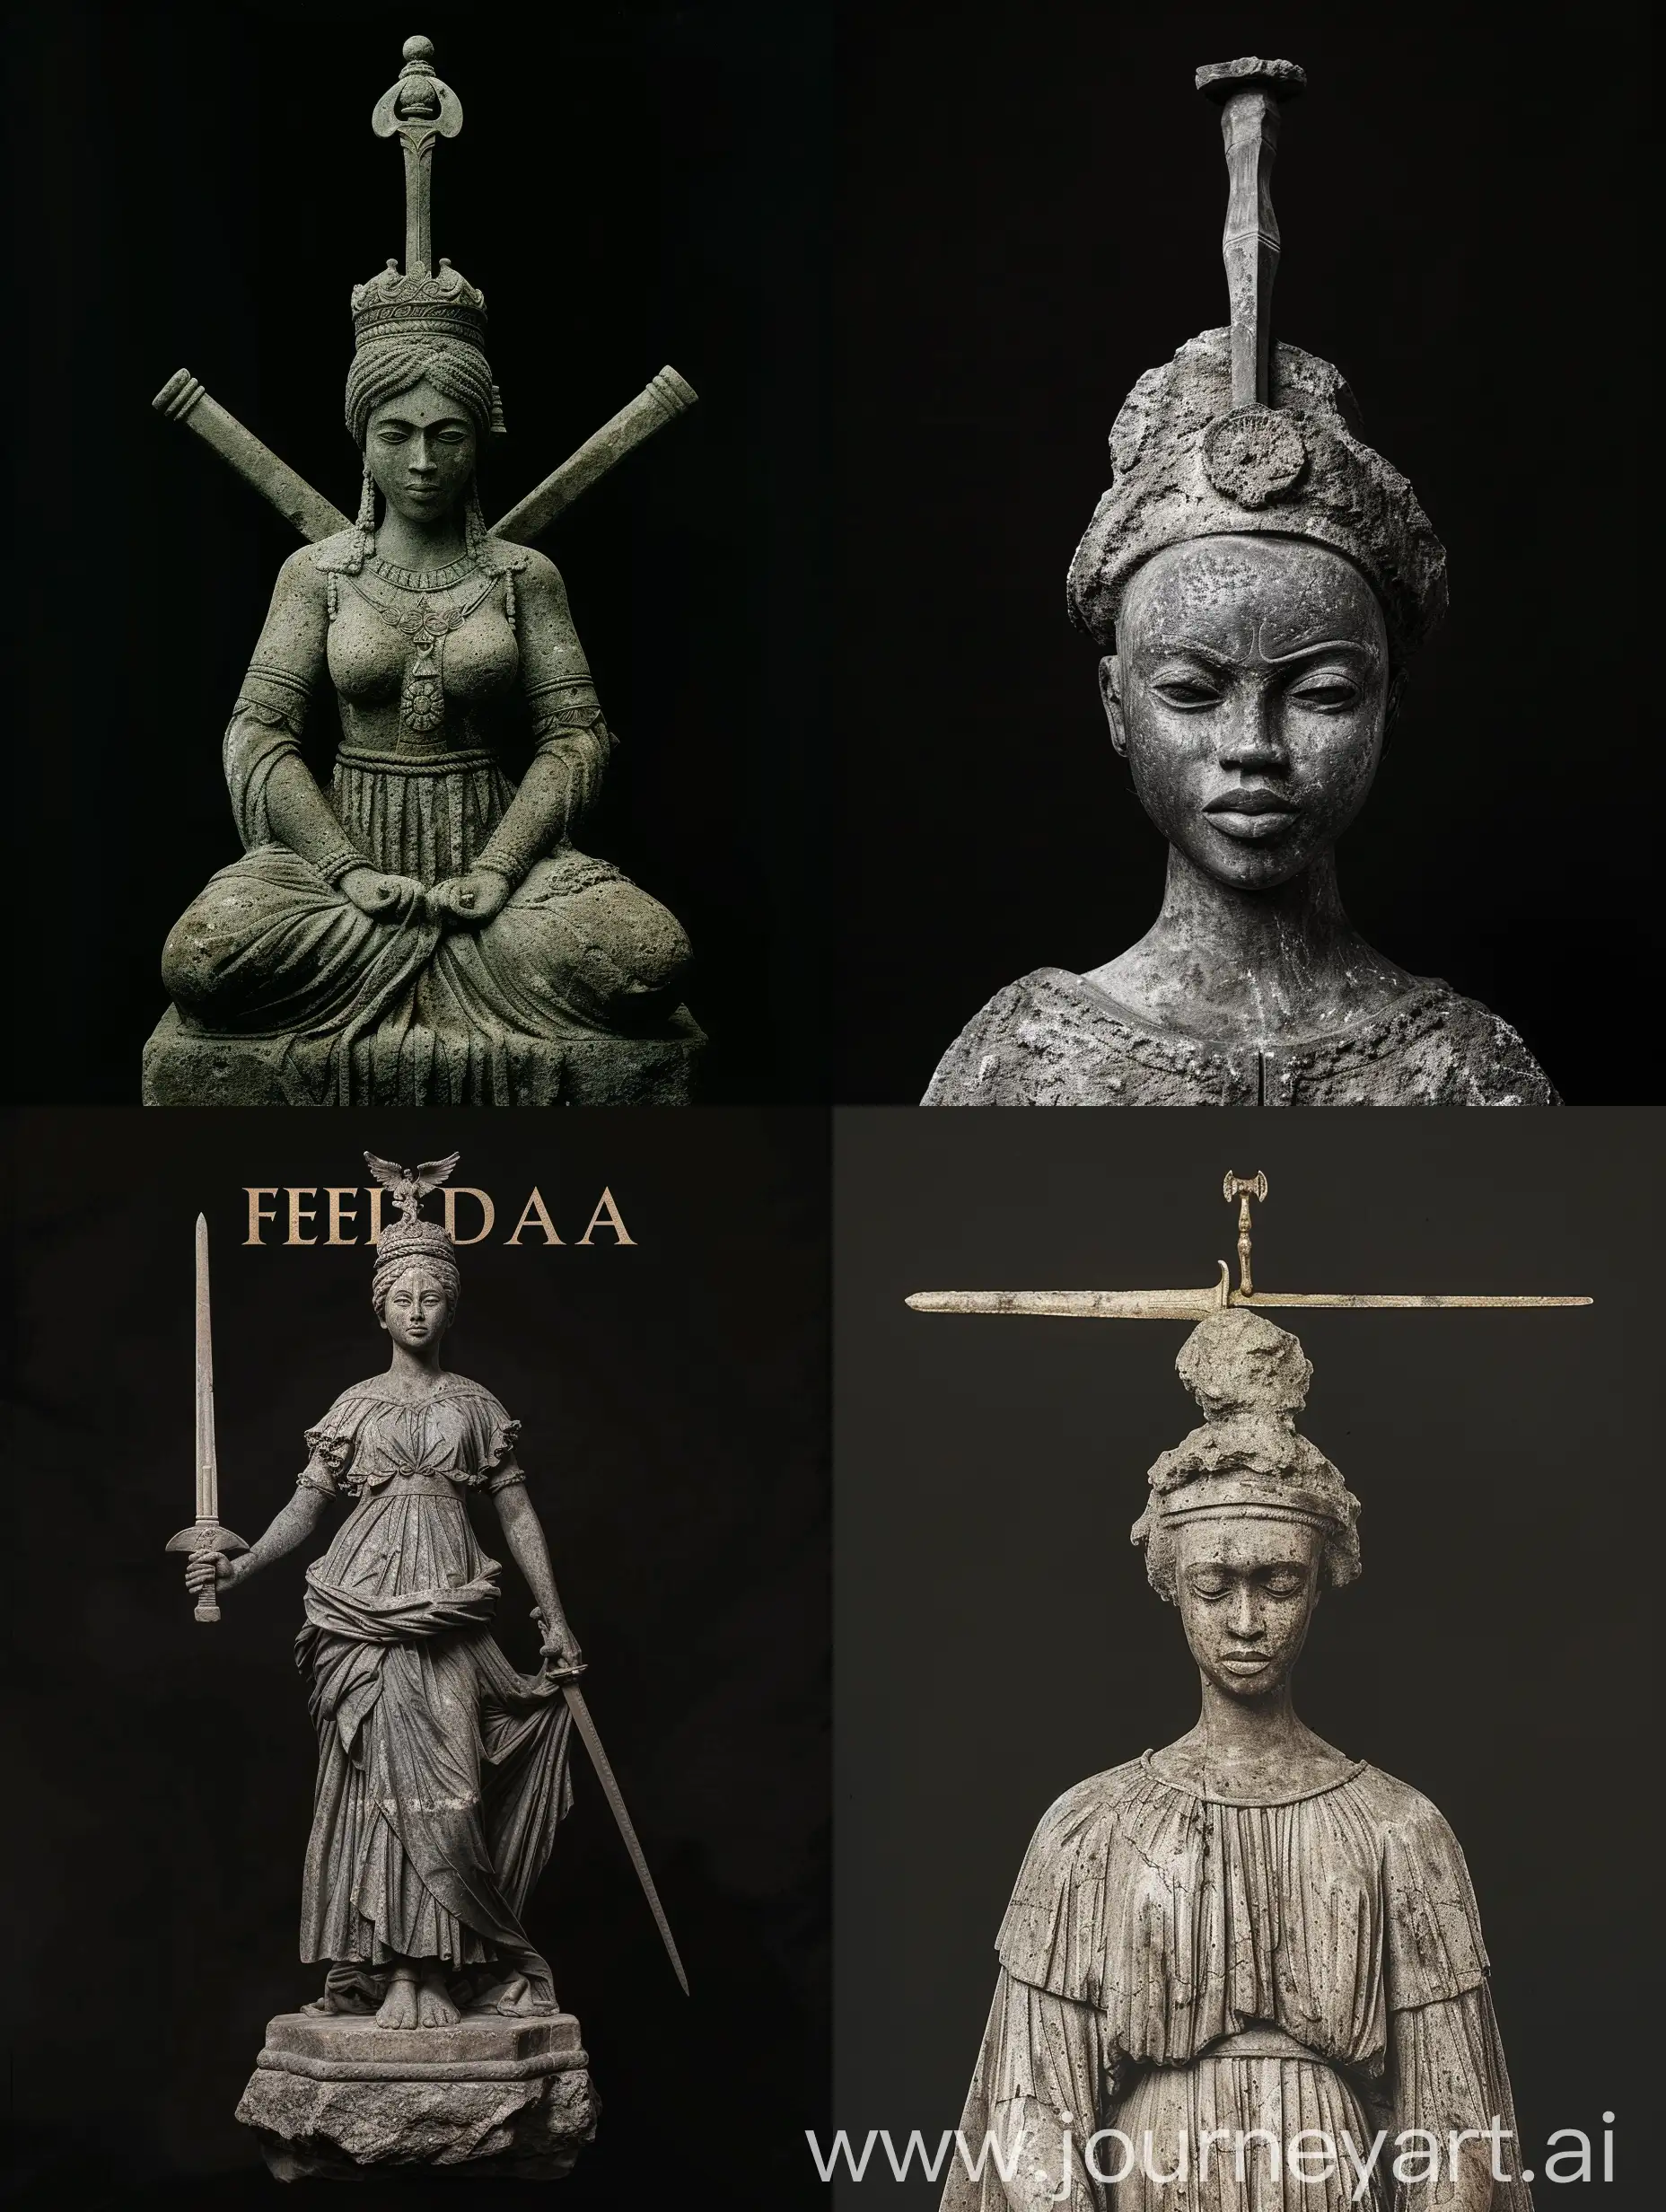 music album cover, stone statue, goddess femida, sword above her head, black background